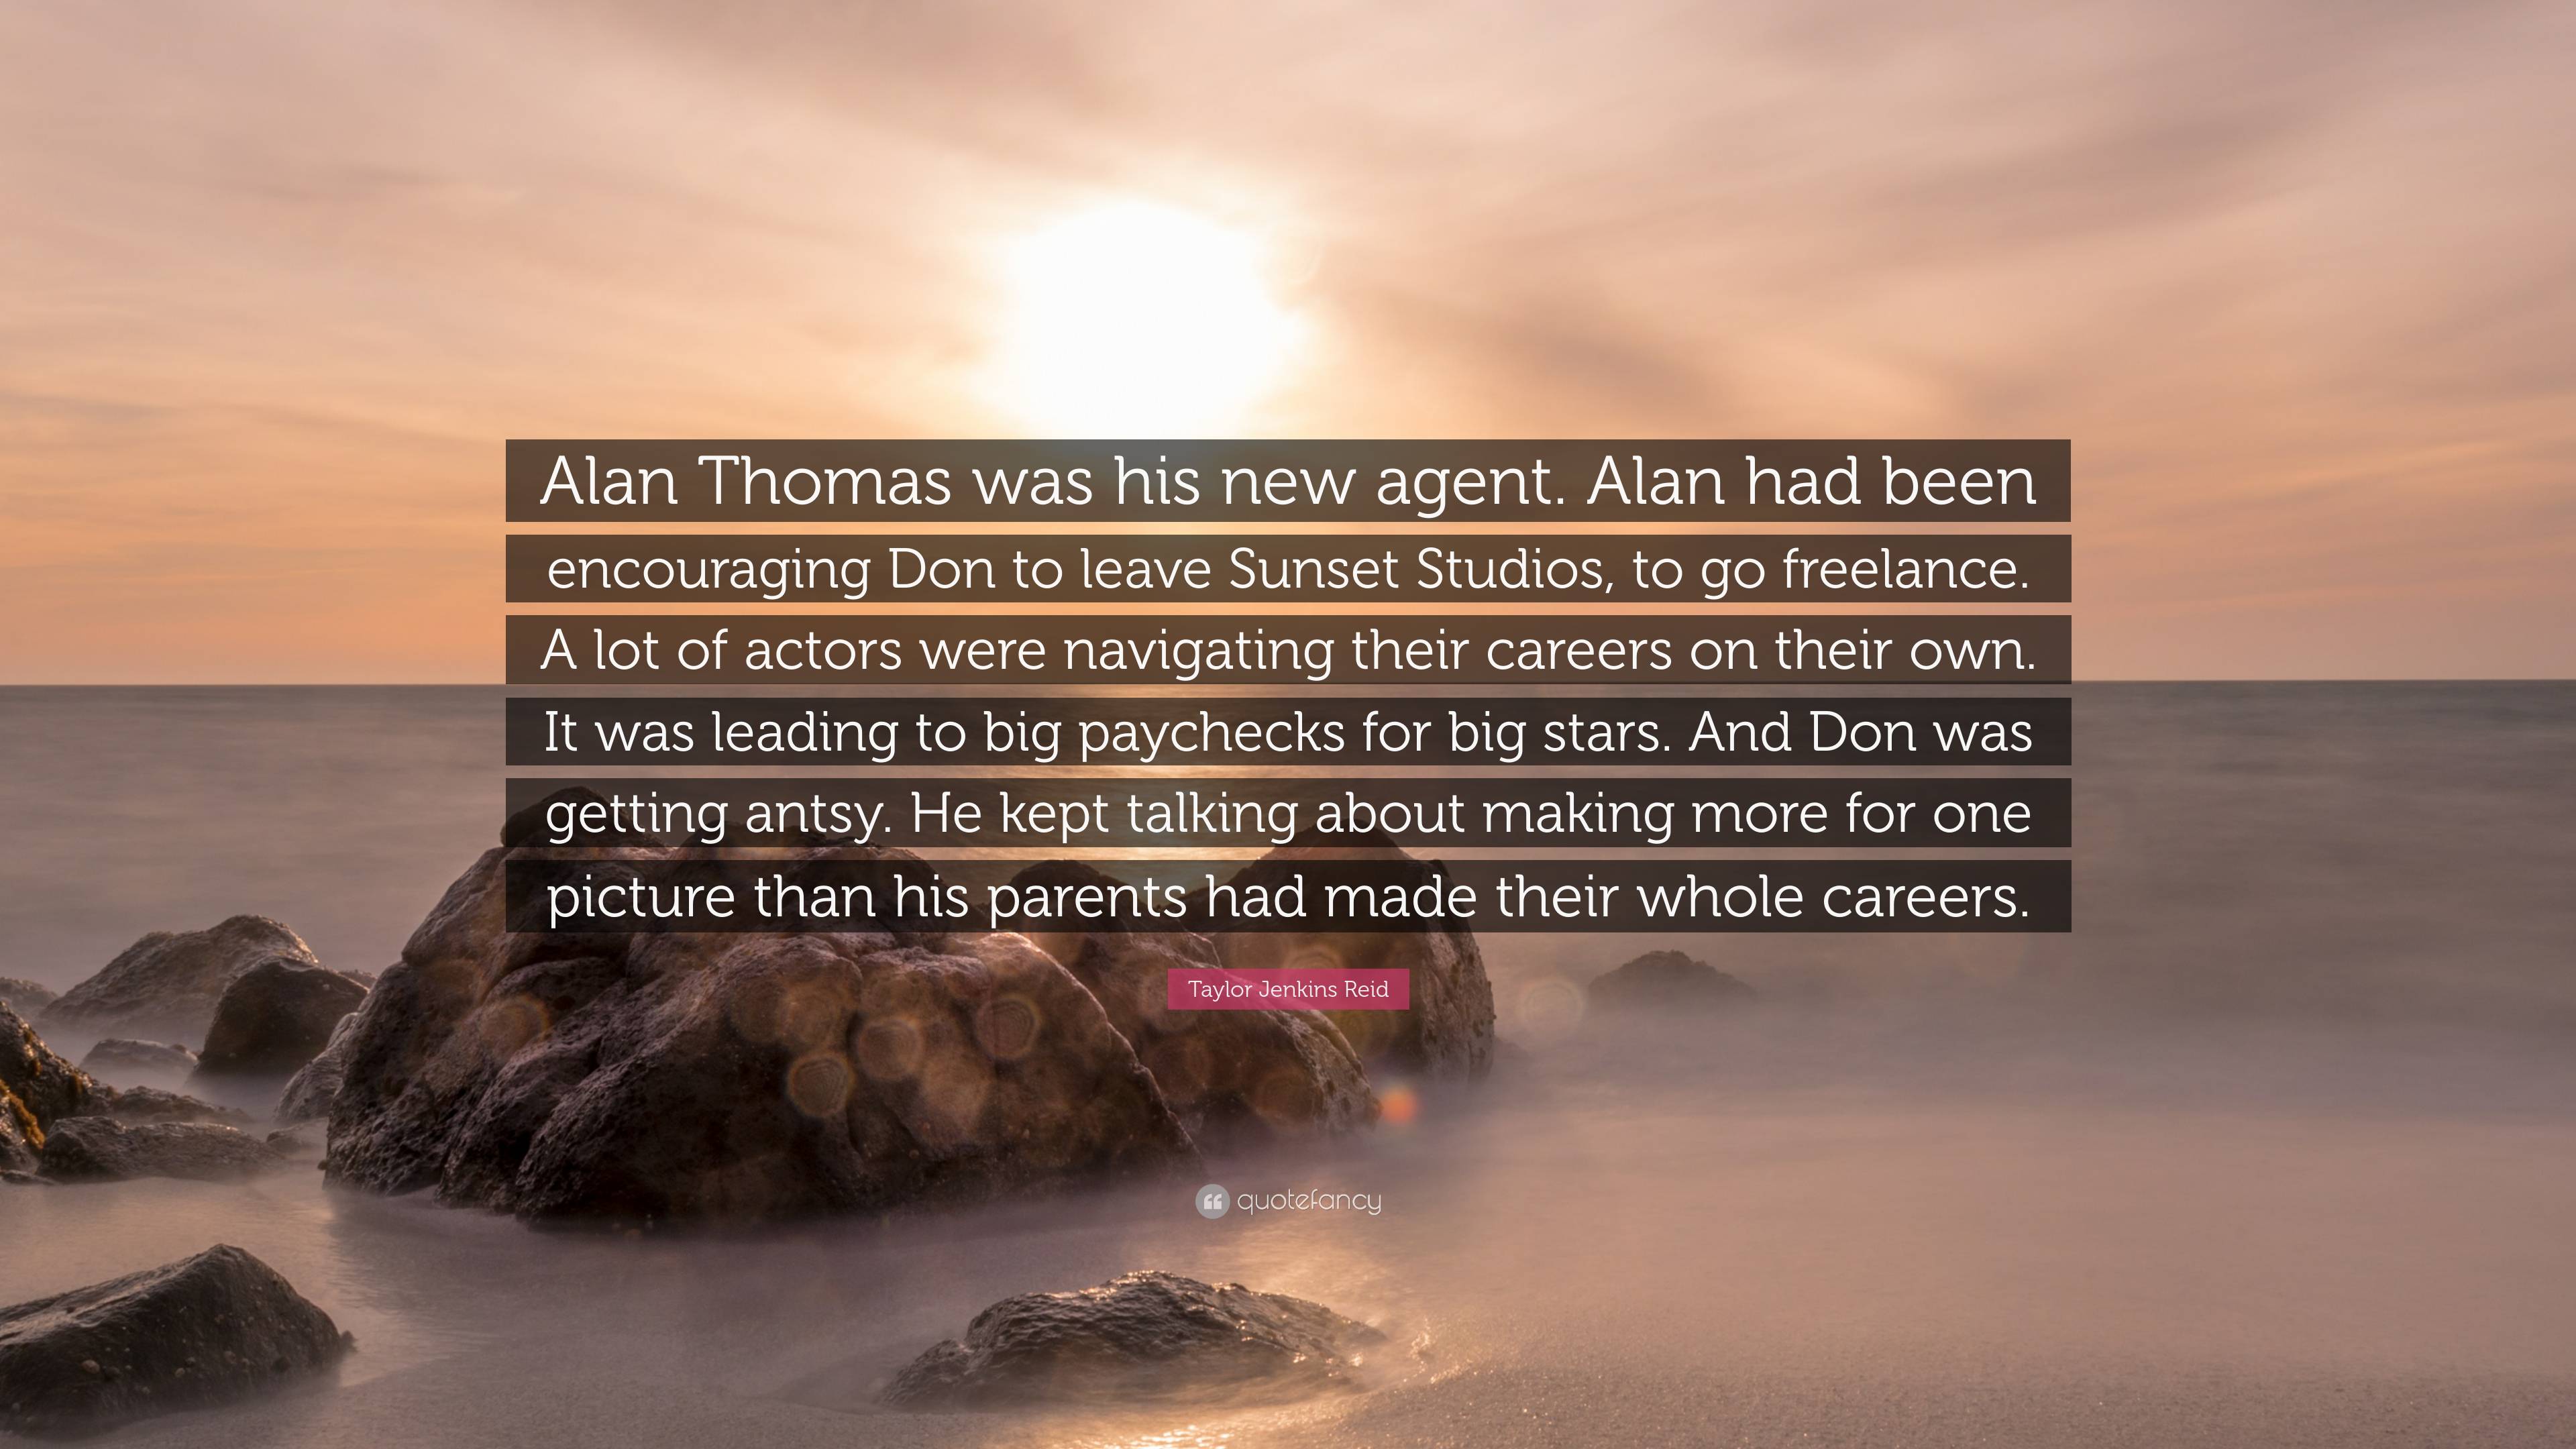 Careers at Alan